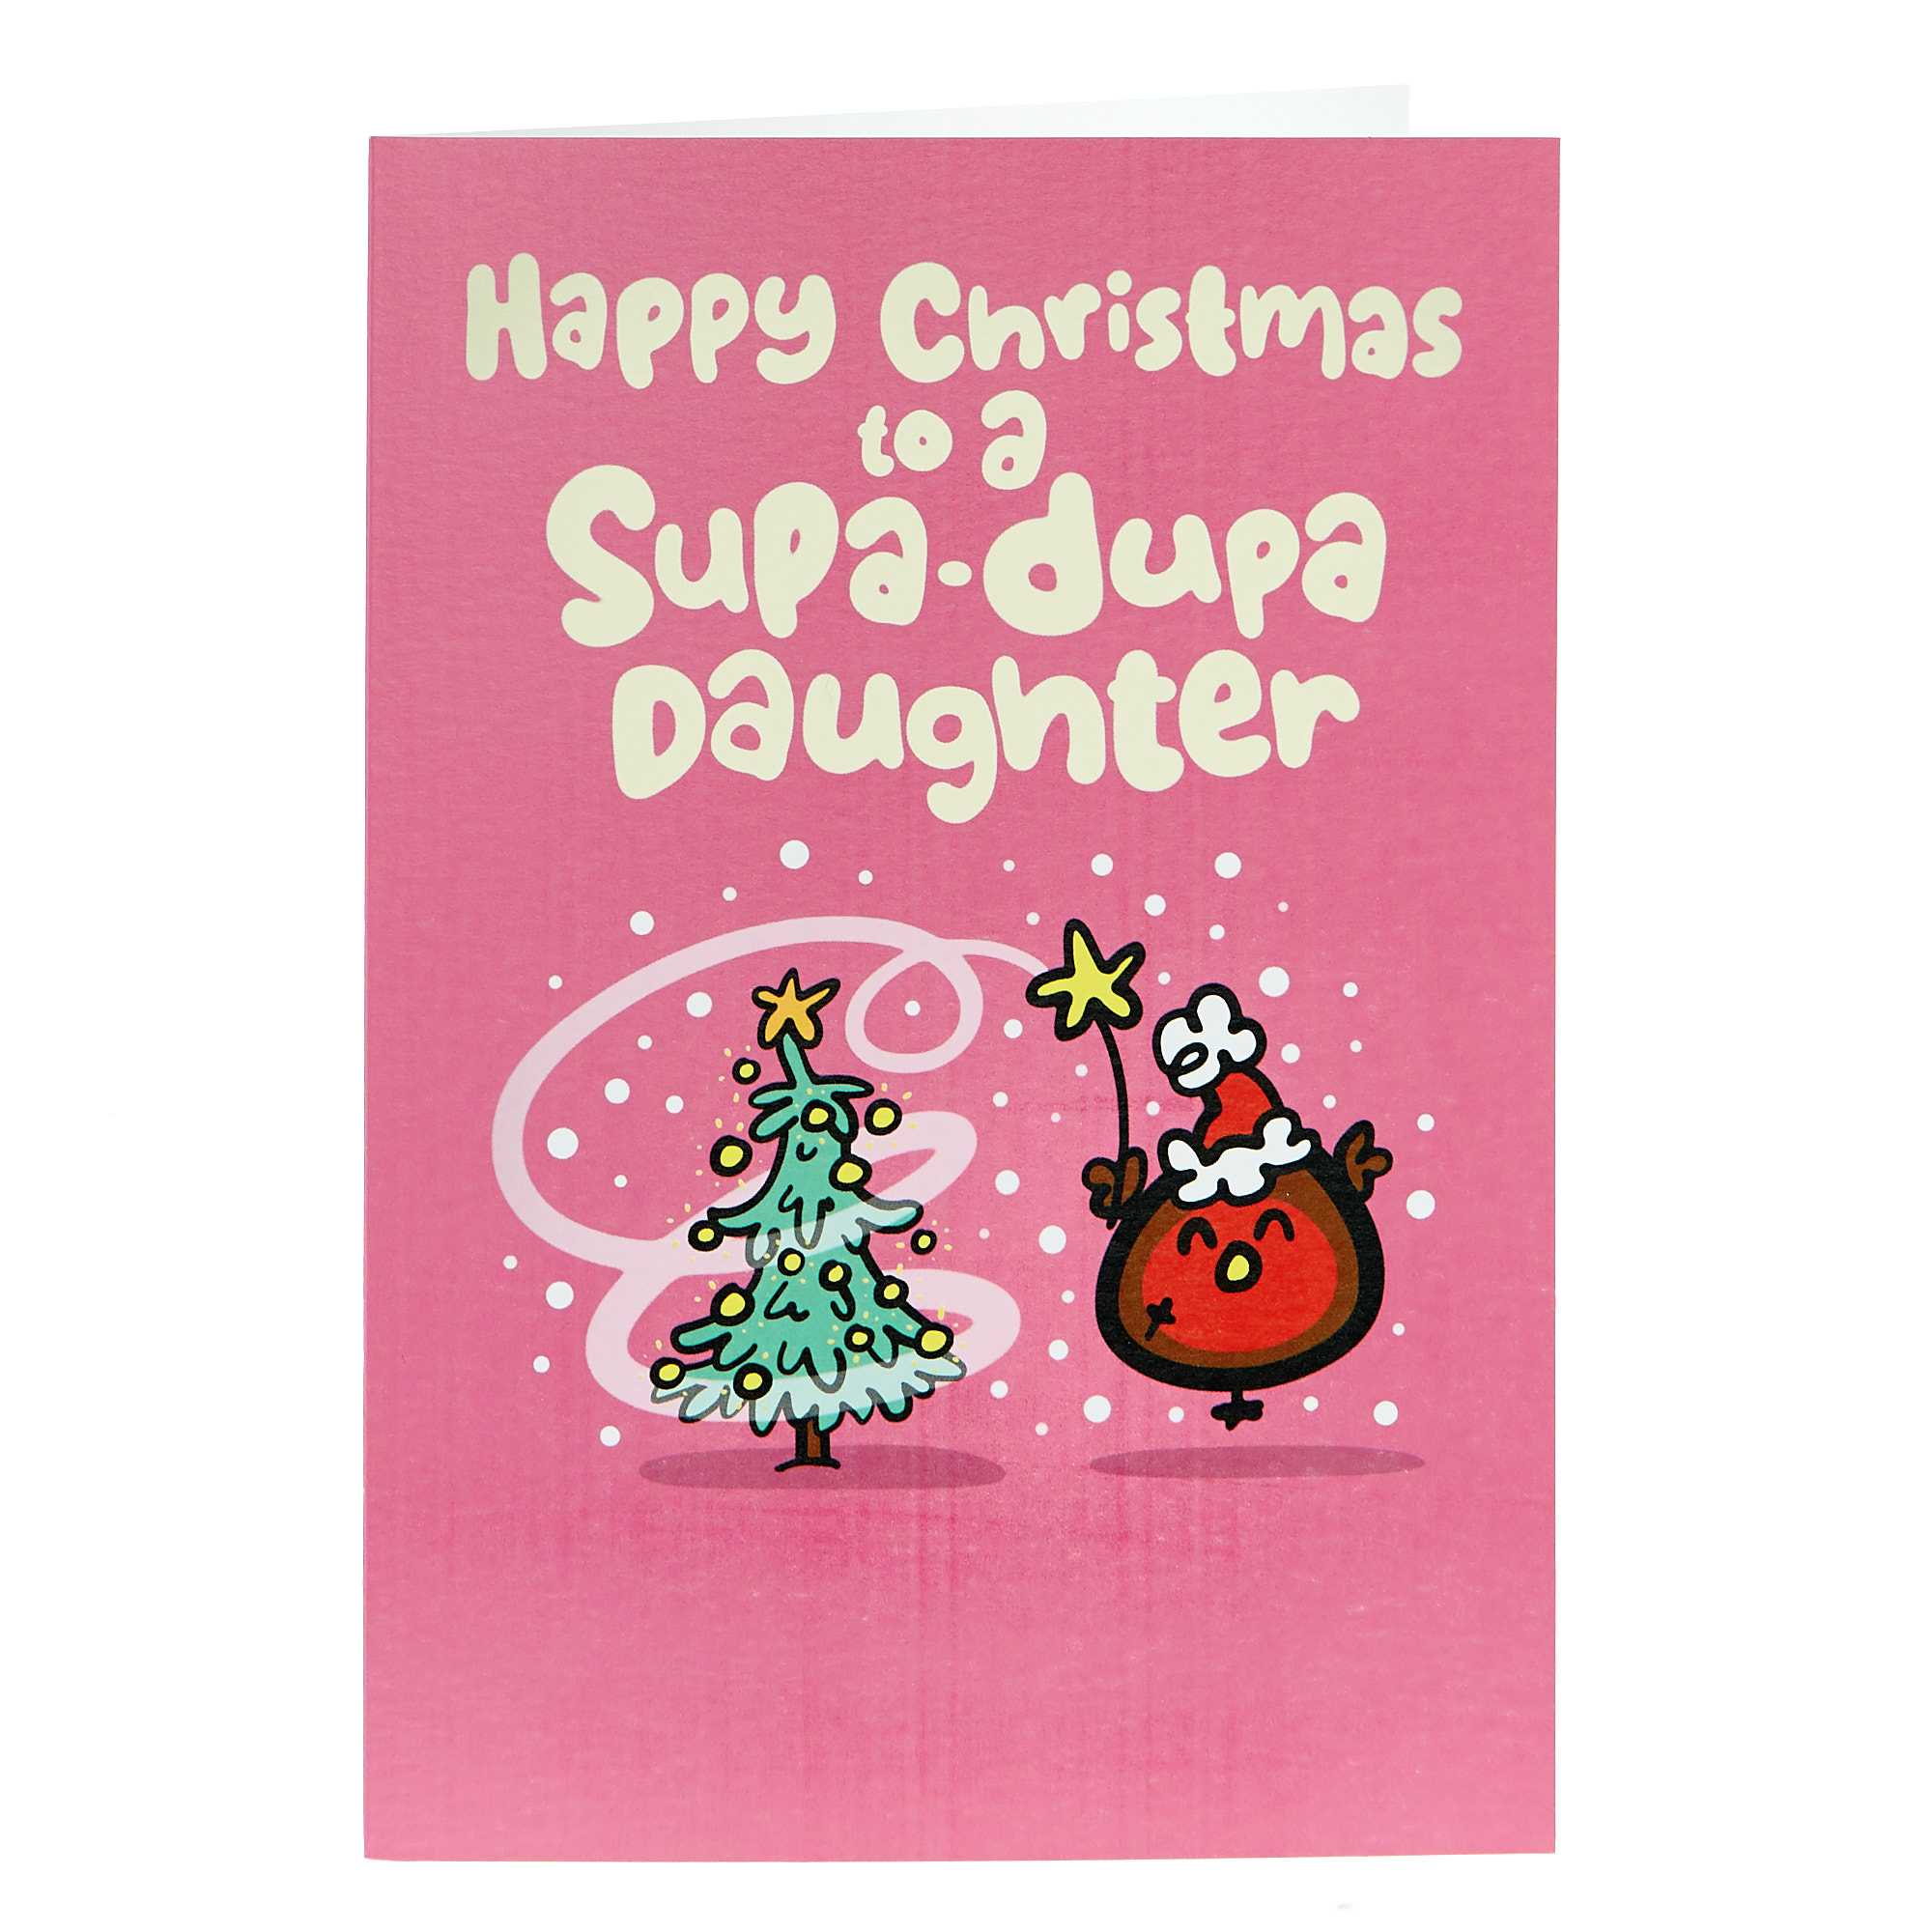 Fuitloops Christmas Card - Supa-Dupa Daughter, Robin And Tree